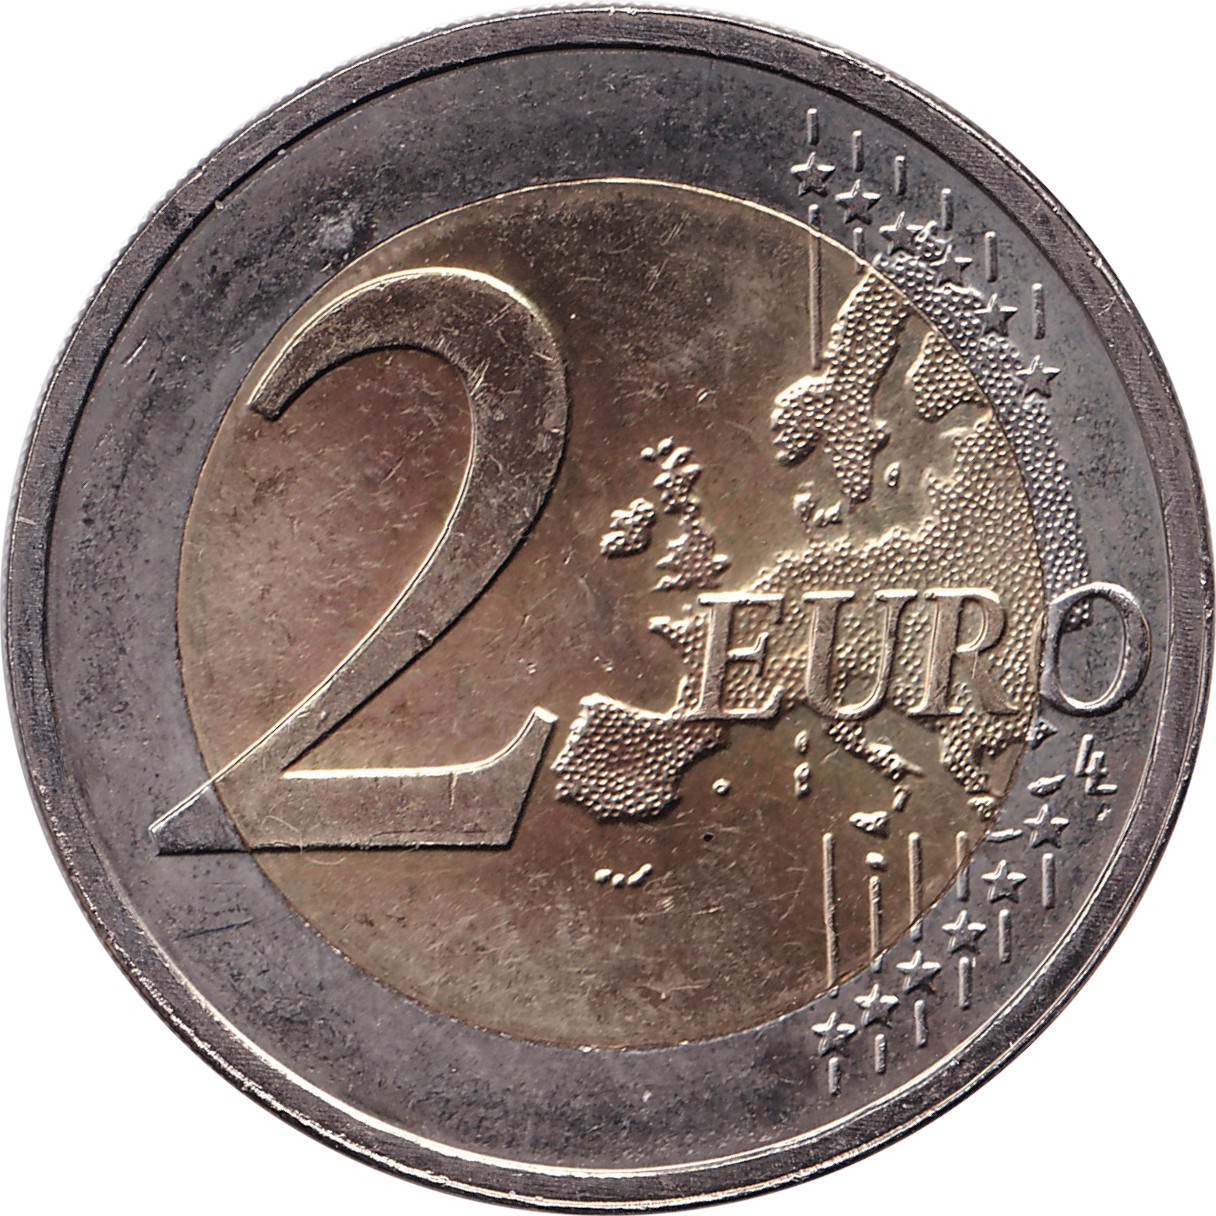 2 euro - Mise en circulation de l'Euro - Pays-Bas